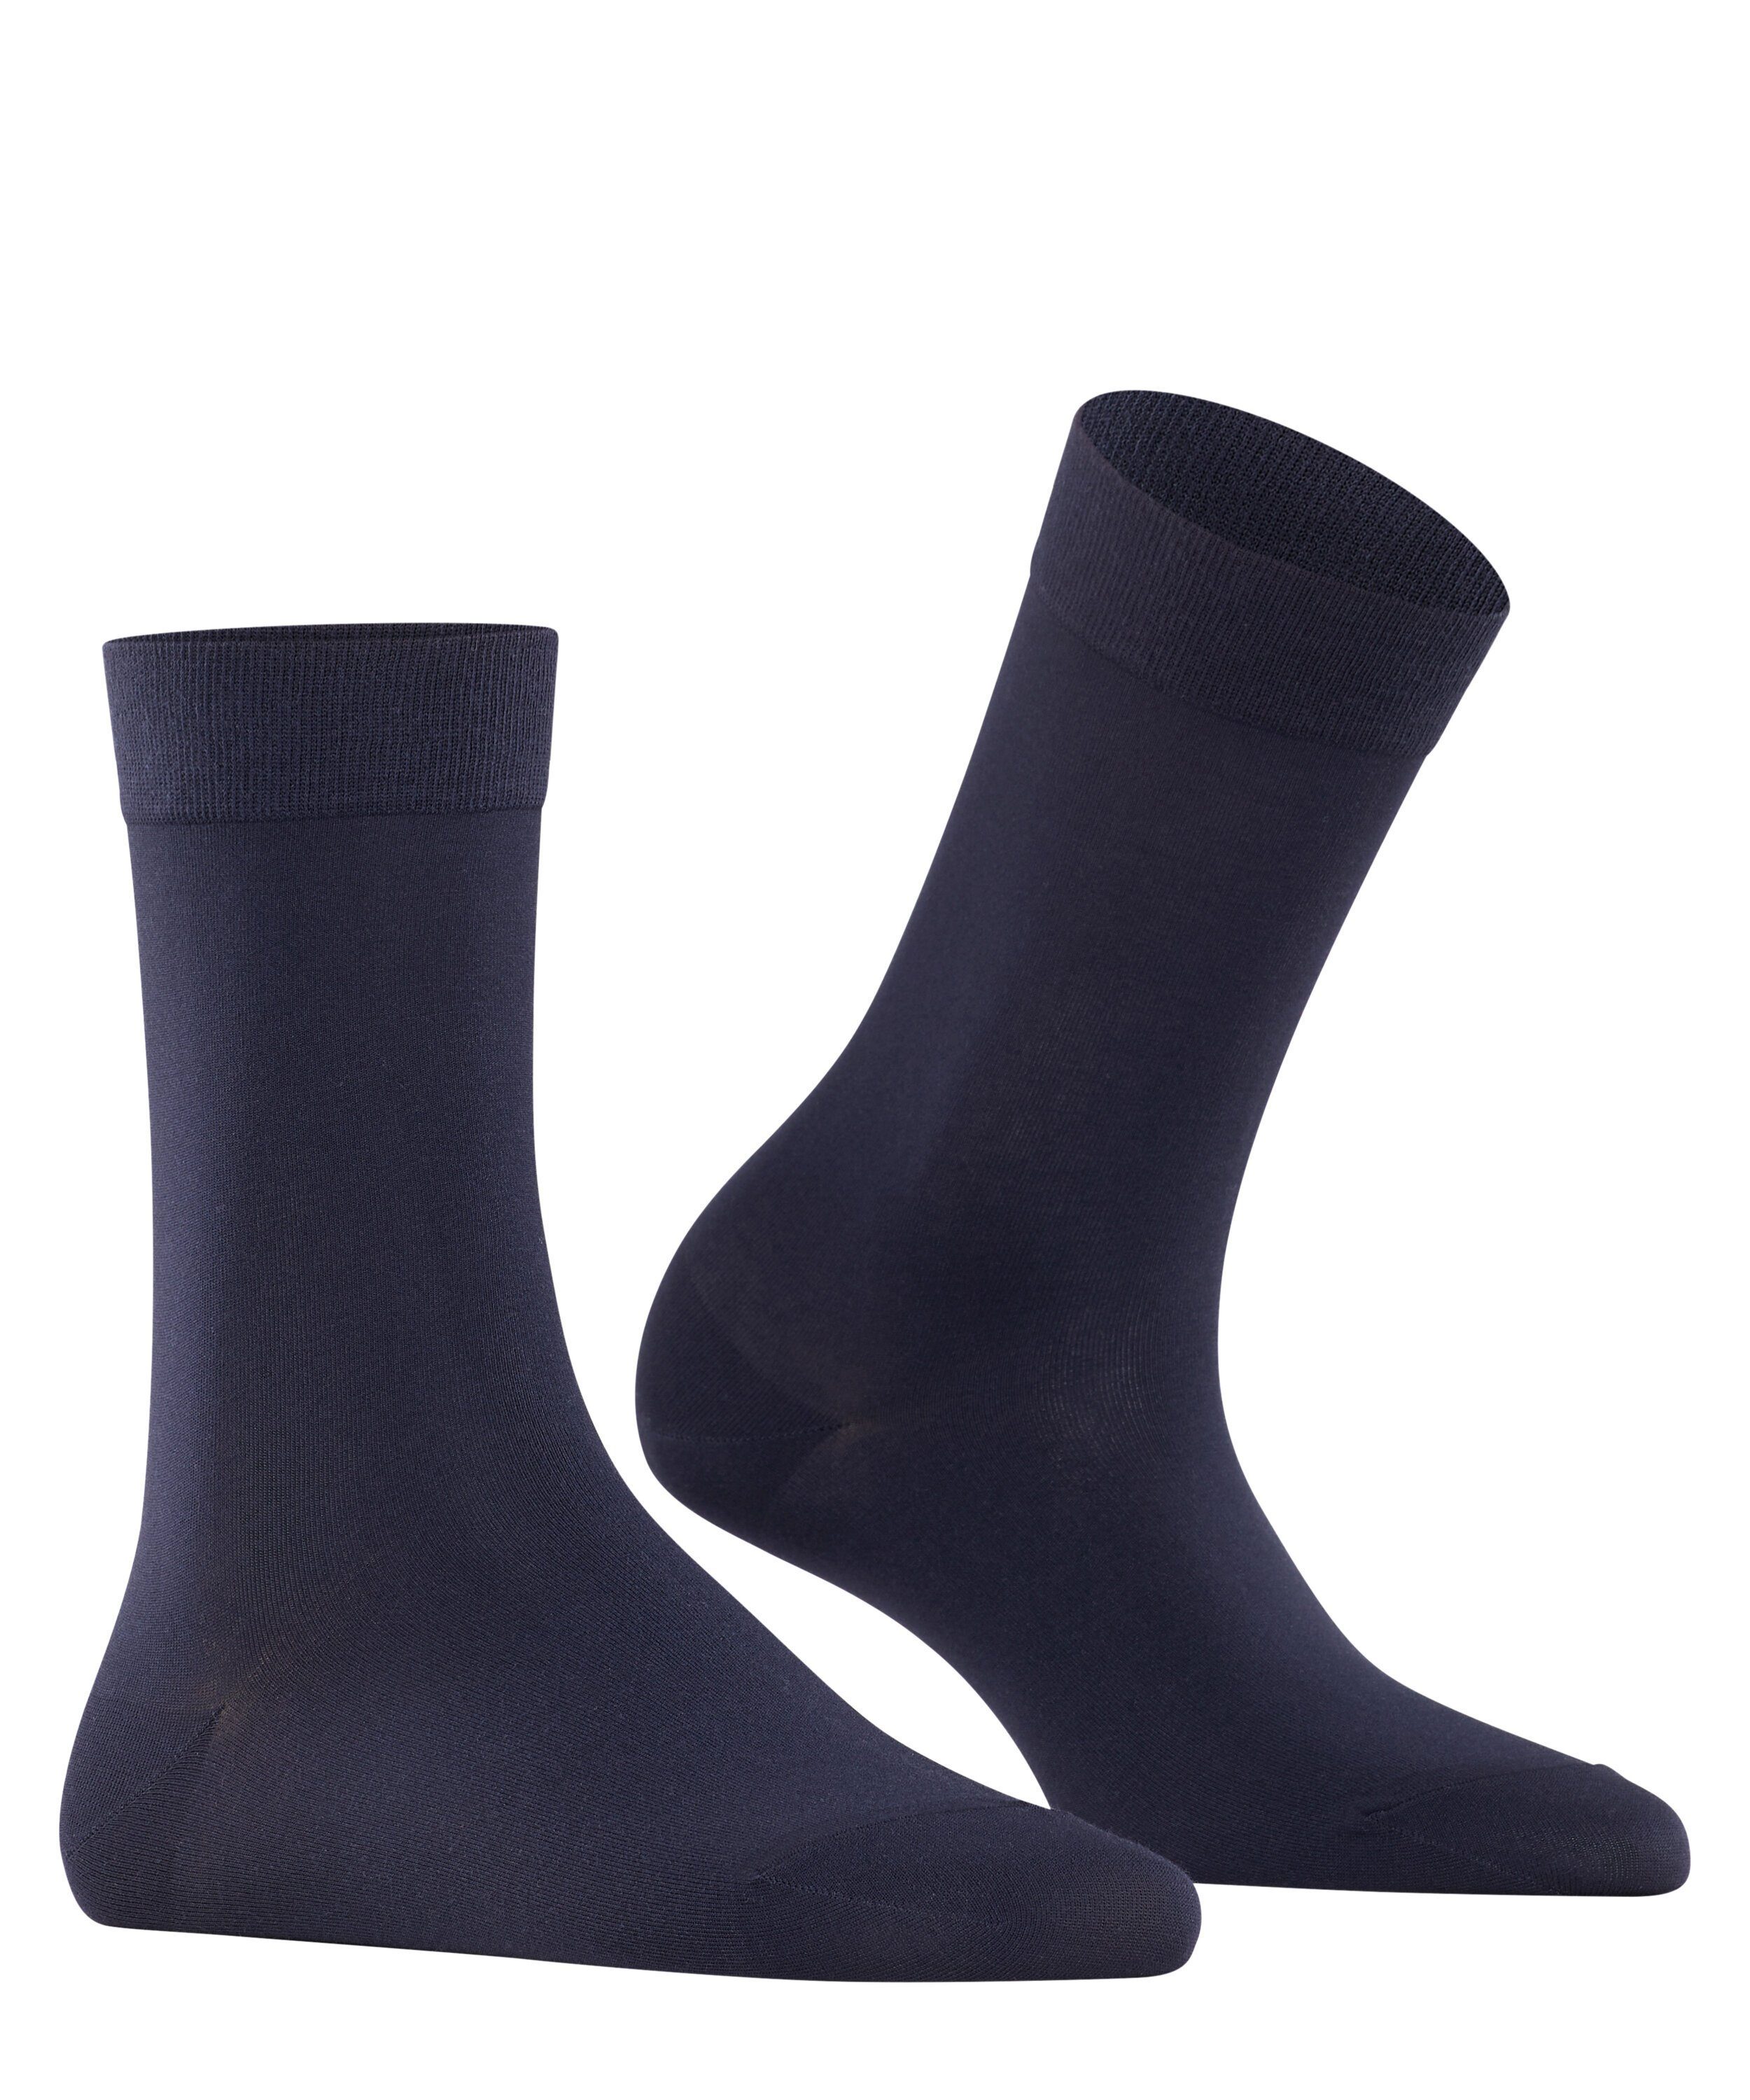 FALKE Socken Cotton Touch navy dark (1-Paar) (6370)